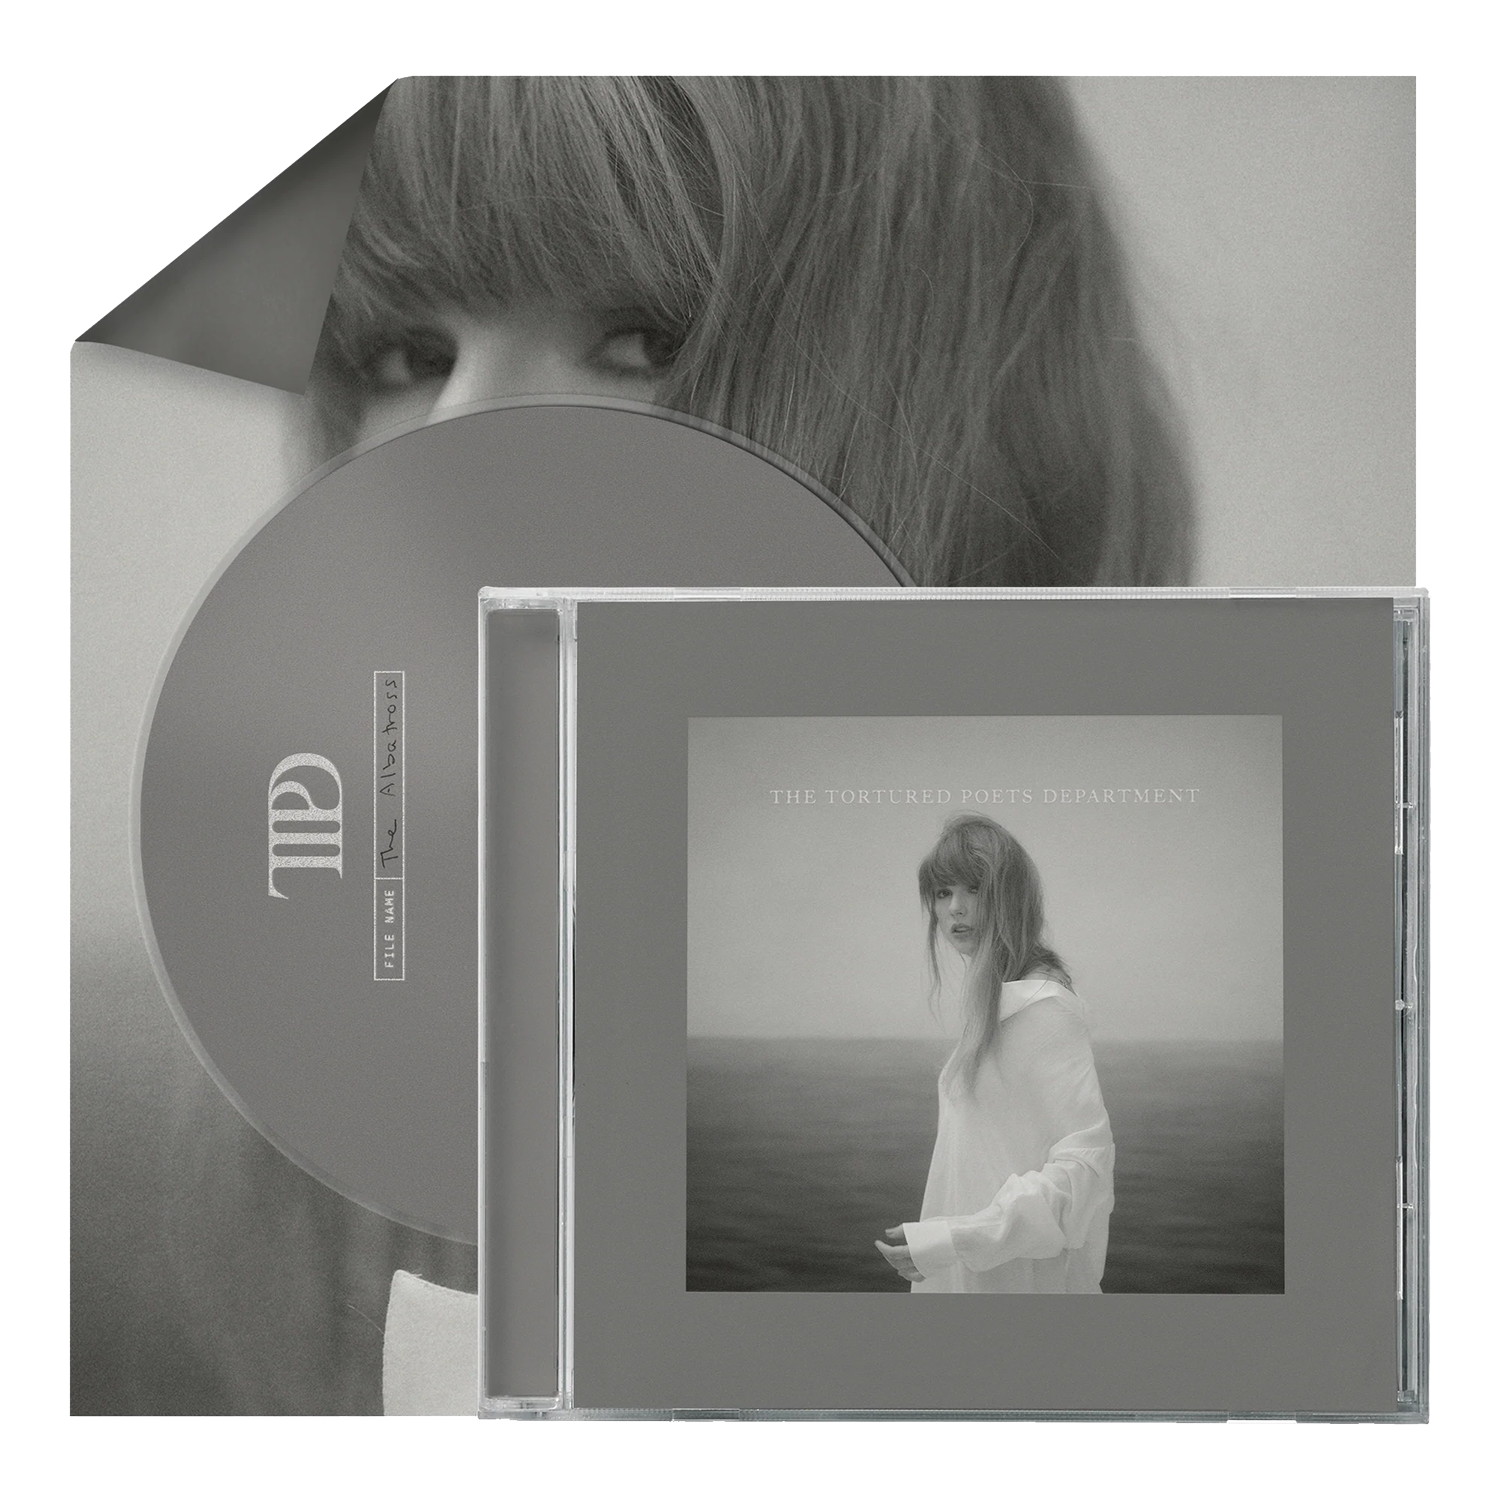 Taylor Swift - The Tortured Poets Department CD + Bonus Track “The Albatross”